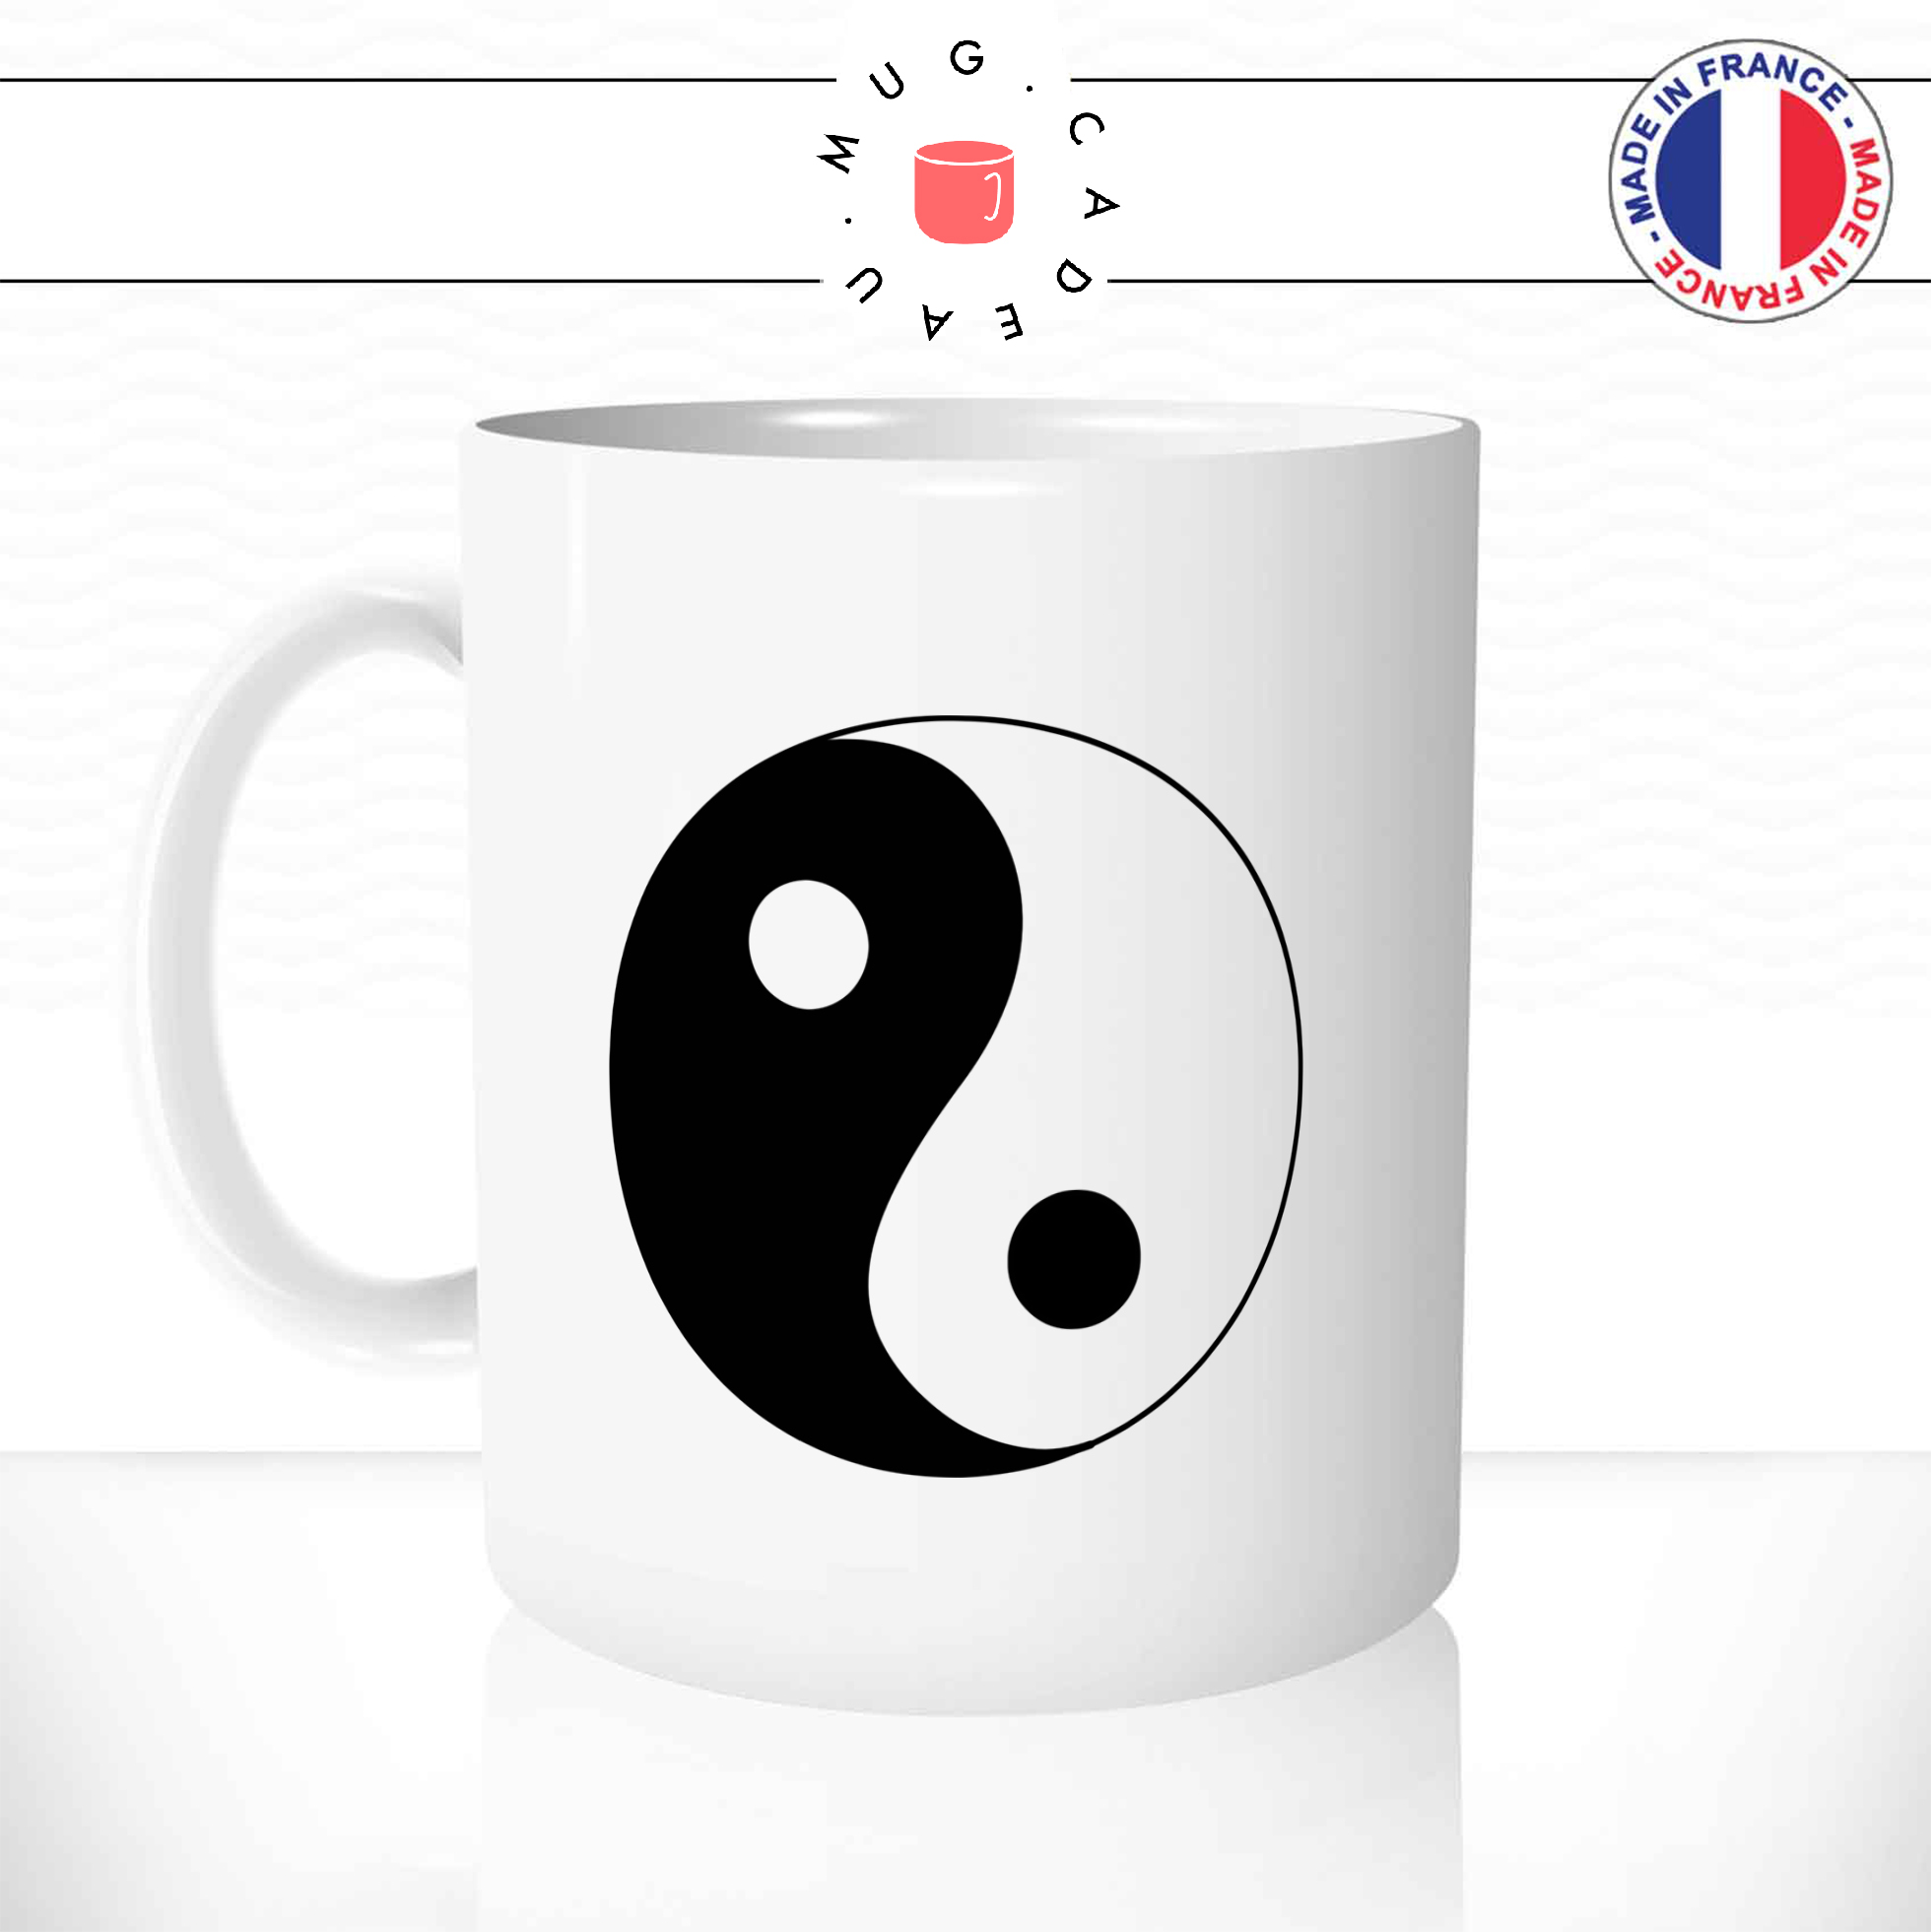 mug-tasse-ref4-religion-buddhiste-yin-yang-noir-blanc-univers-cafe-the-mugs-tasses-personnalise-anse-gauche